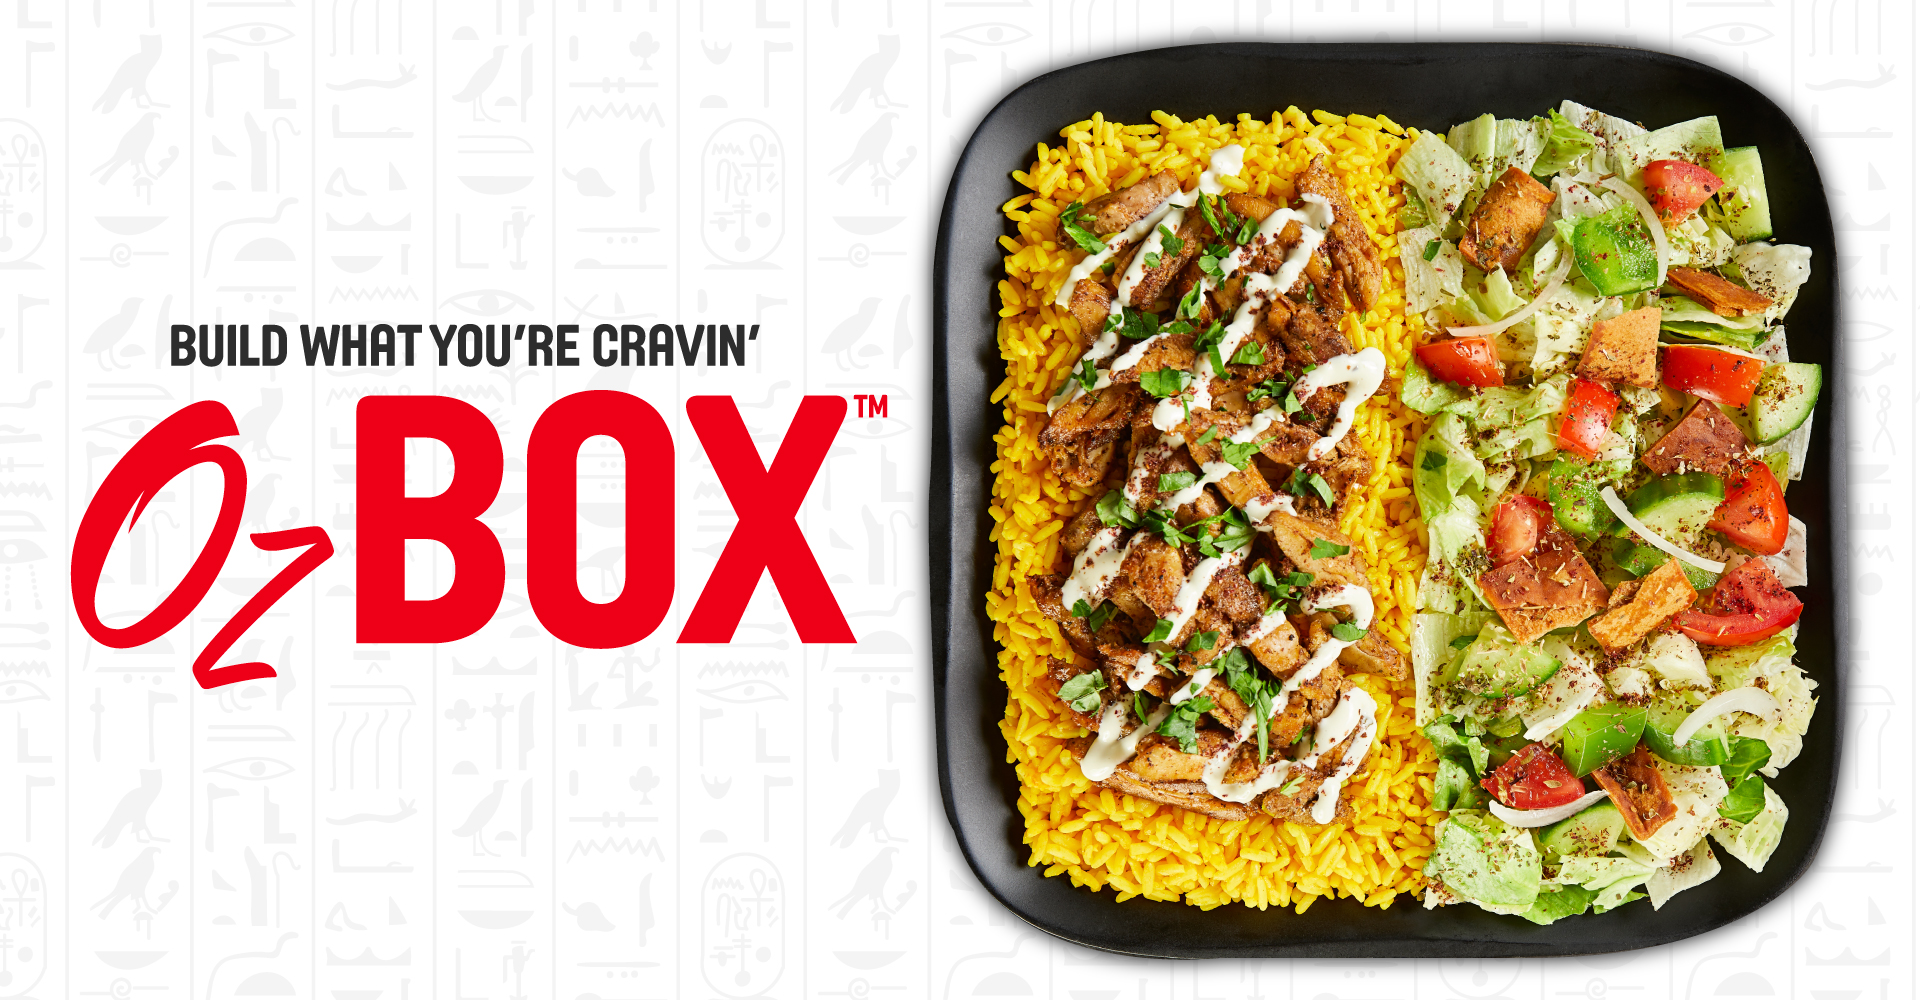 build what you're cravin', oz box.